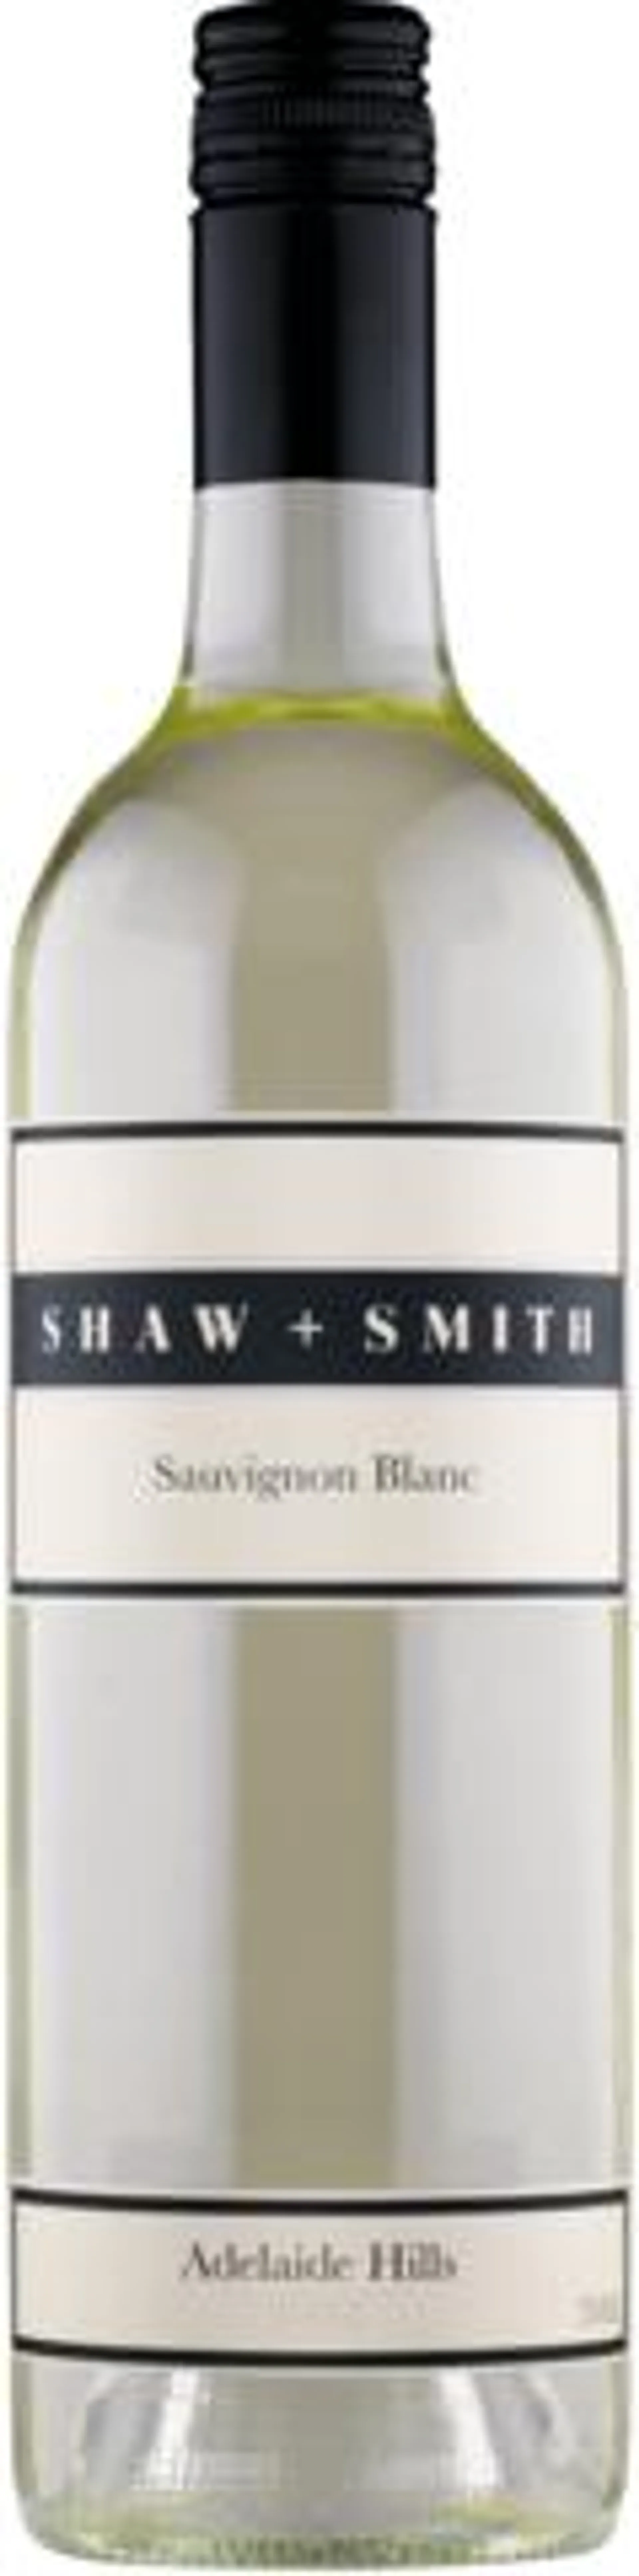 Shaw & Smith Sauvignon Blanc 750ML